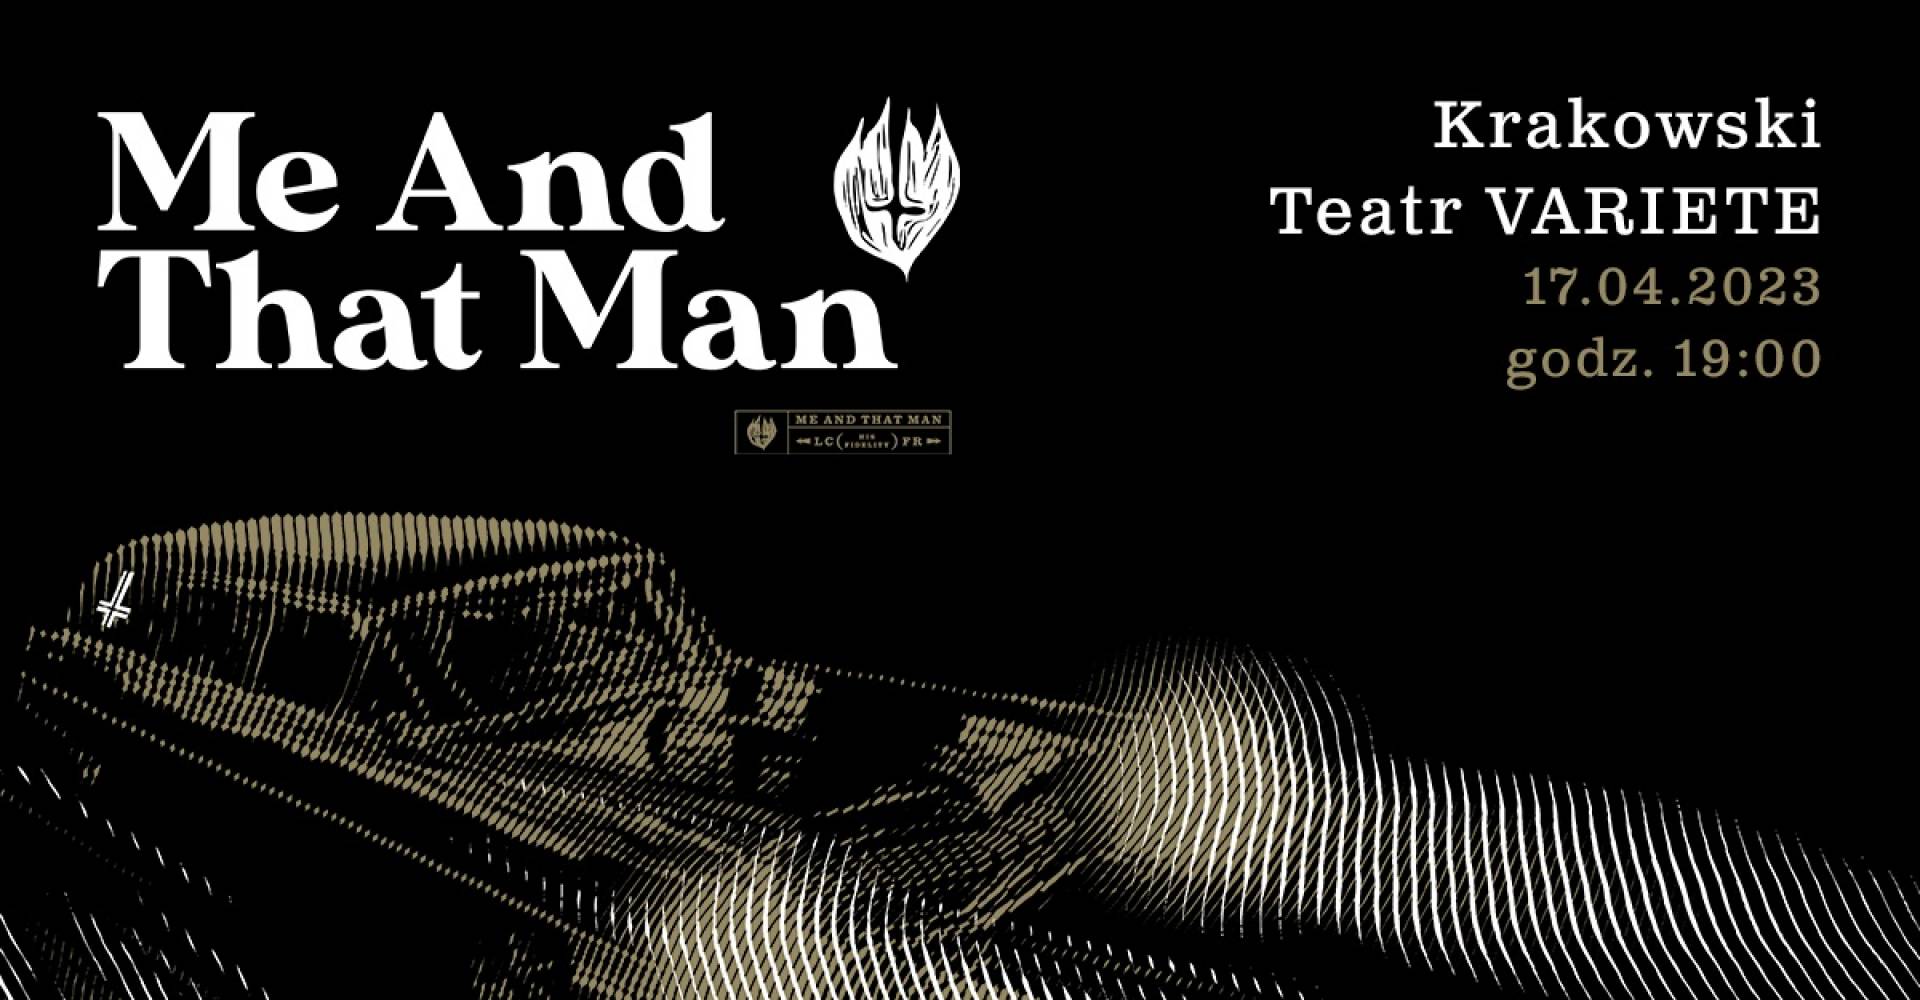 Koncert Me And That Man w Krakowskim Teatrze VARIETE